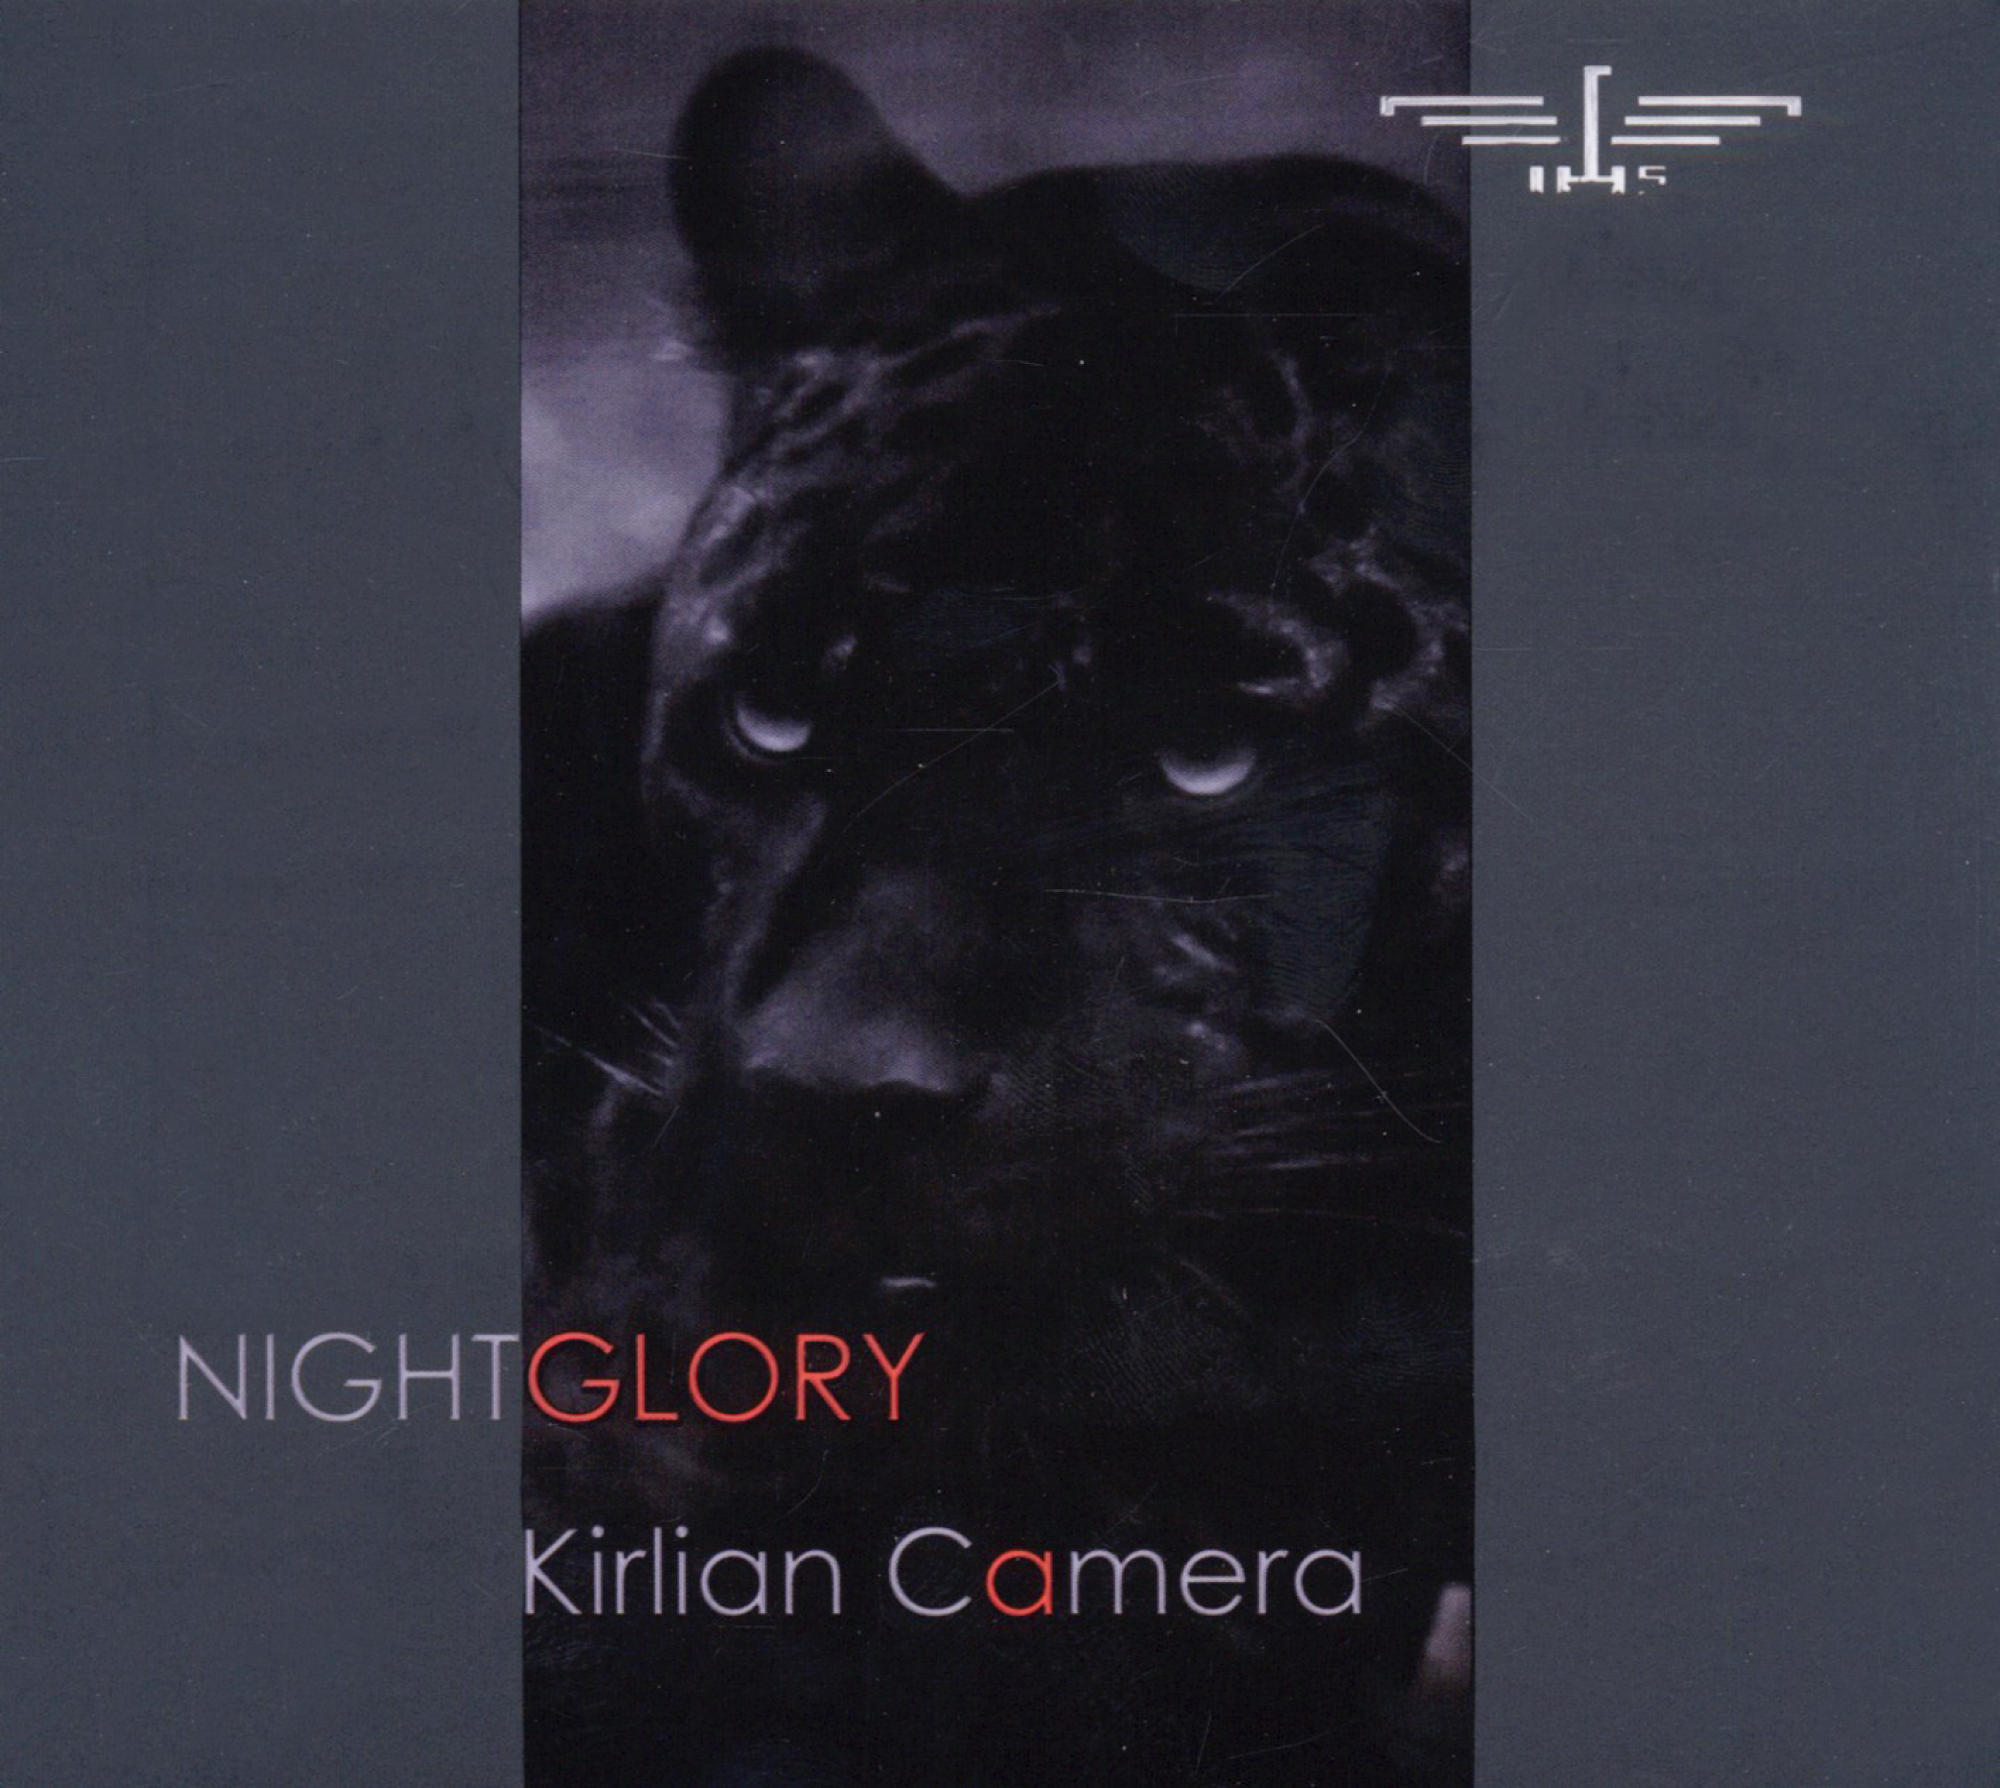 Edition) Kirlian Camera - - Nightglory (CD) (Deluxe